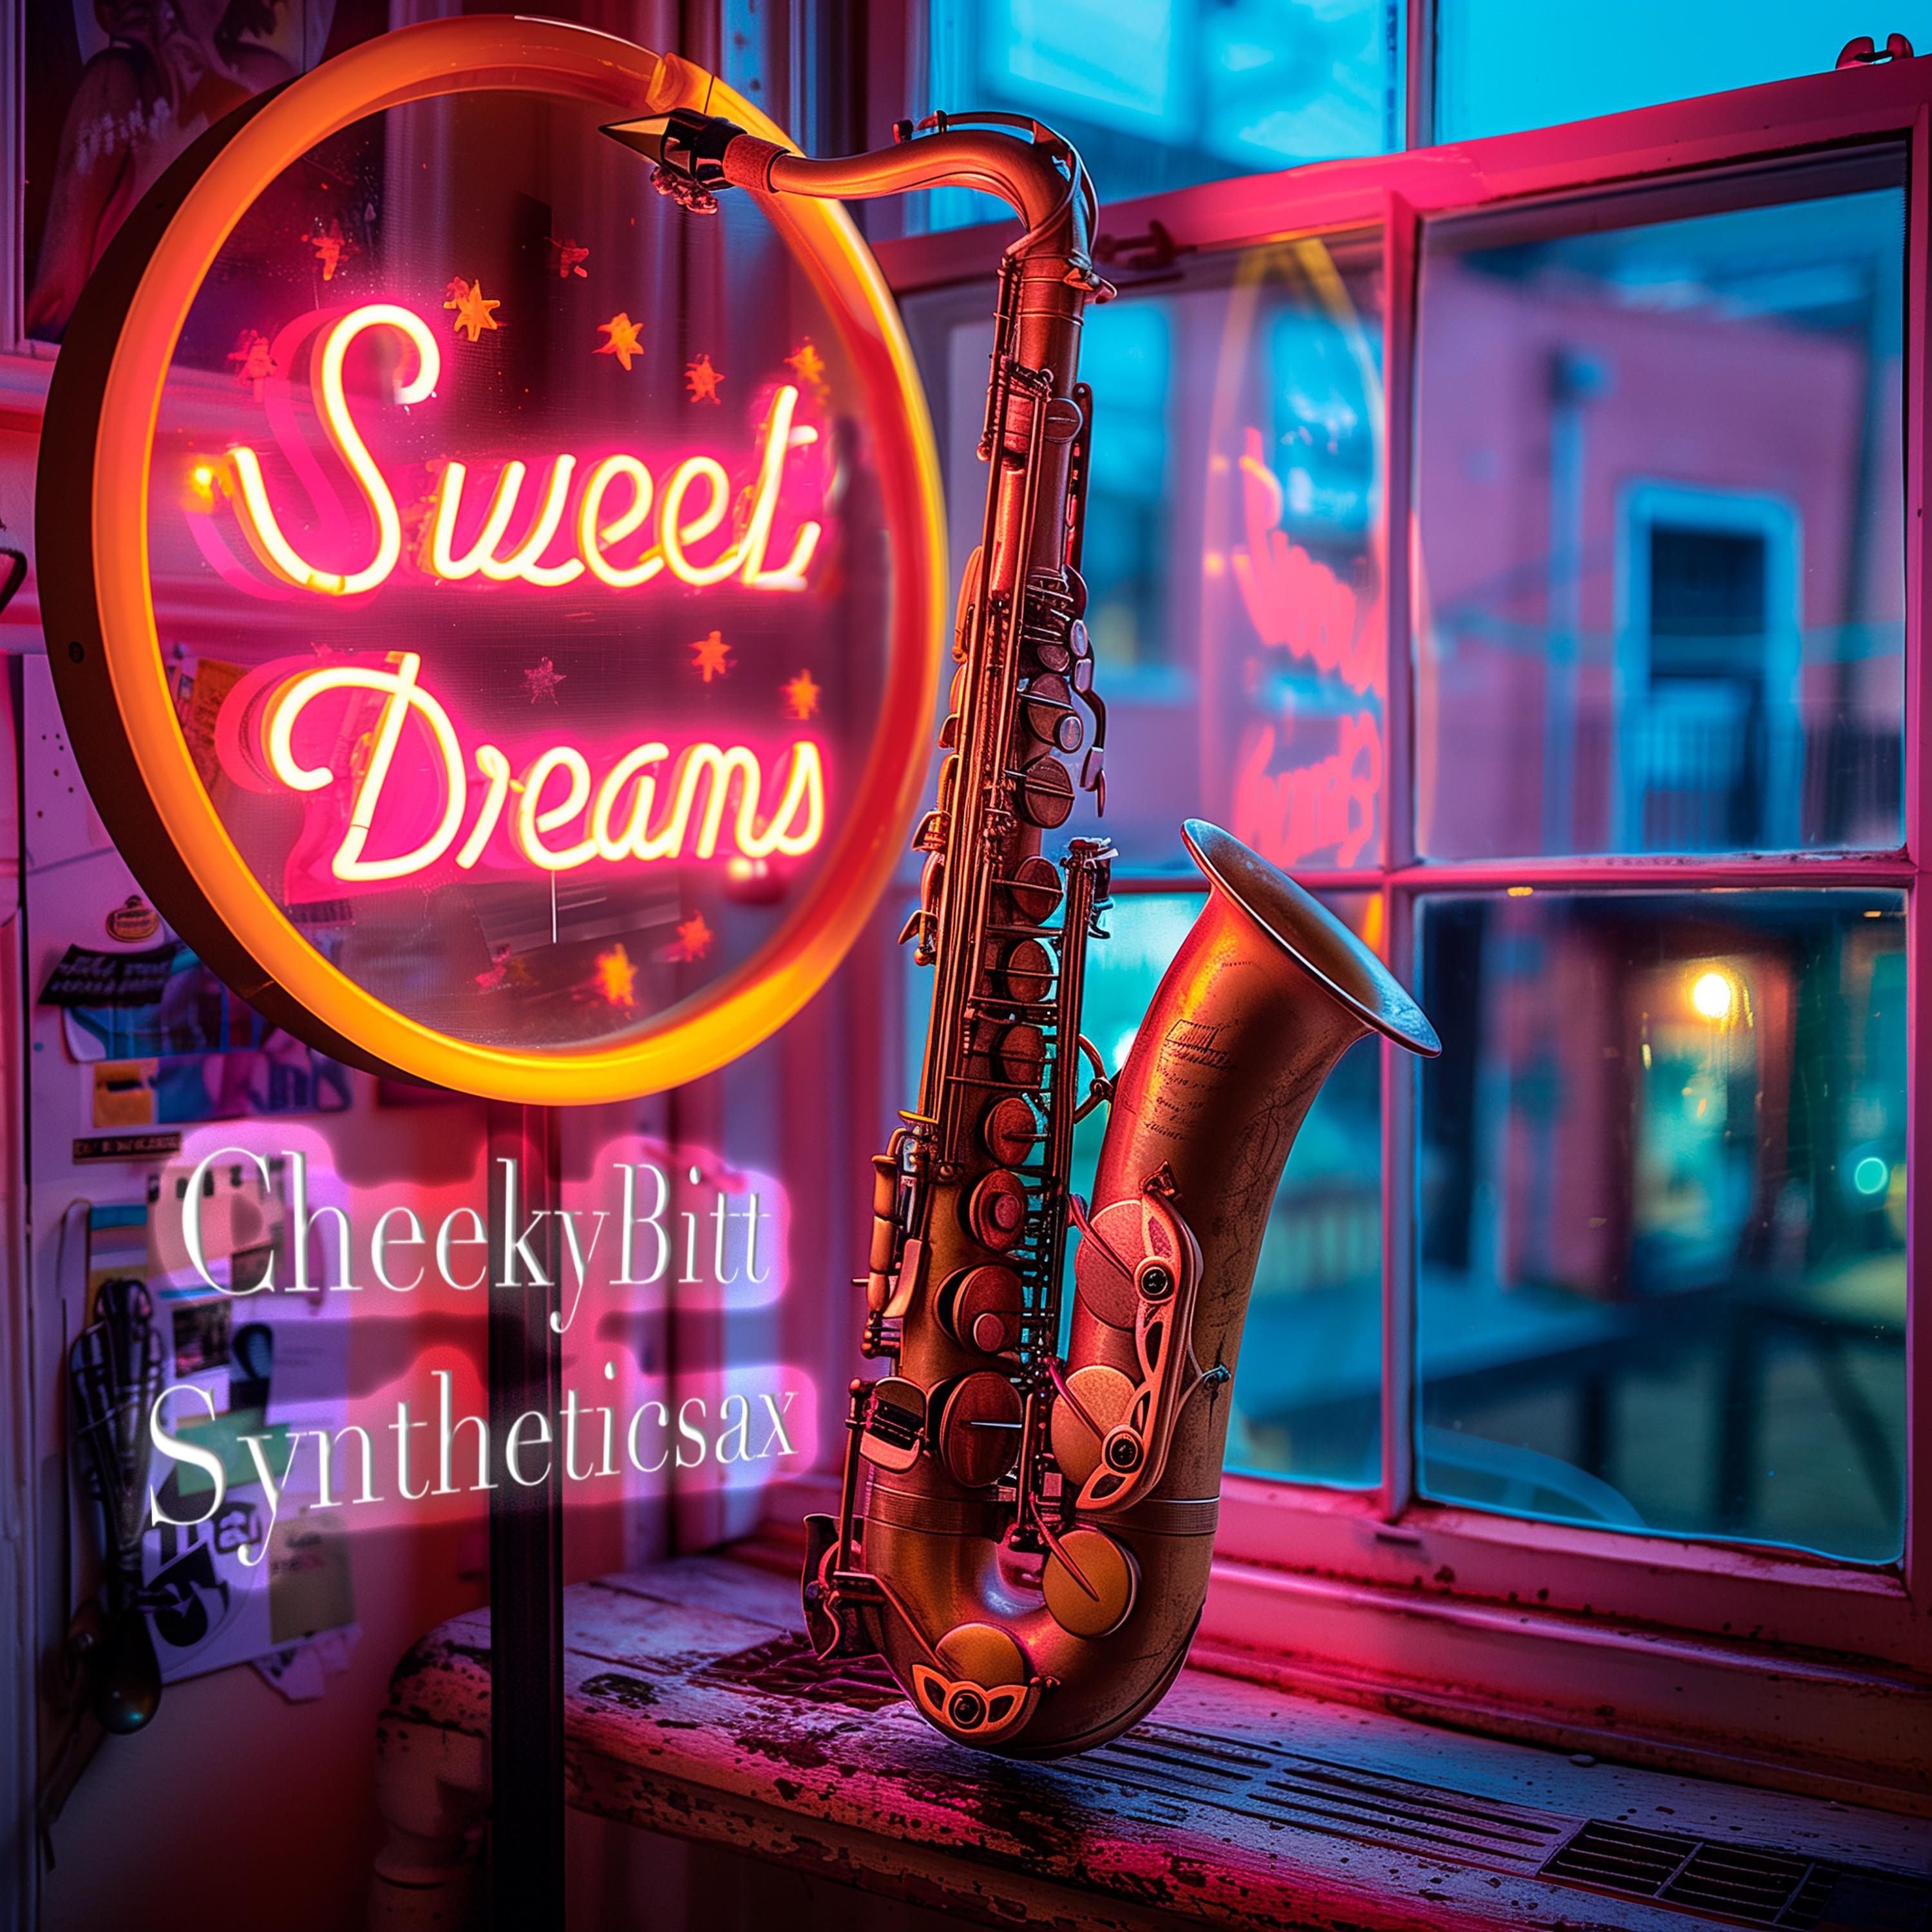 CheekyBitt - Sweet Dreams